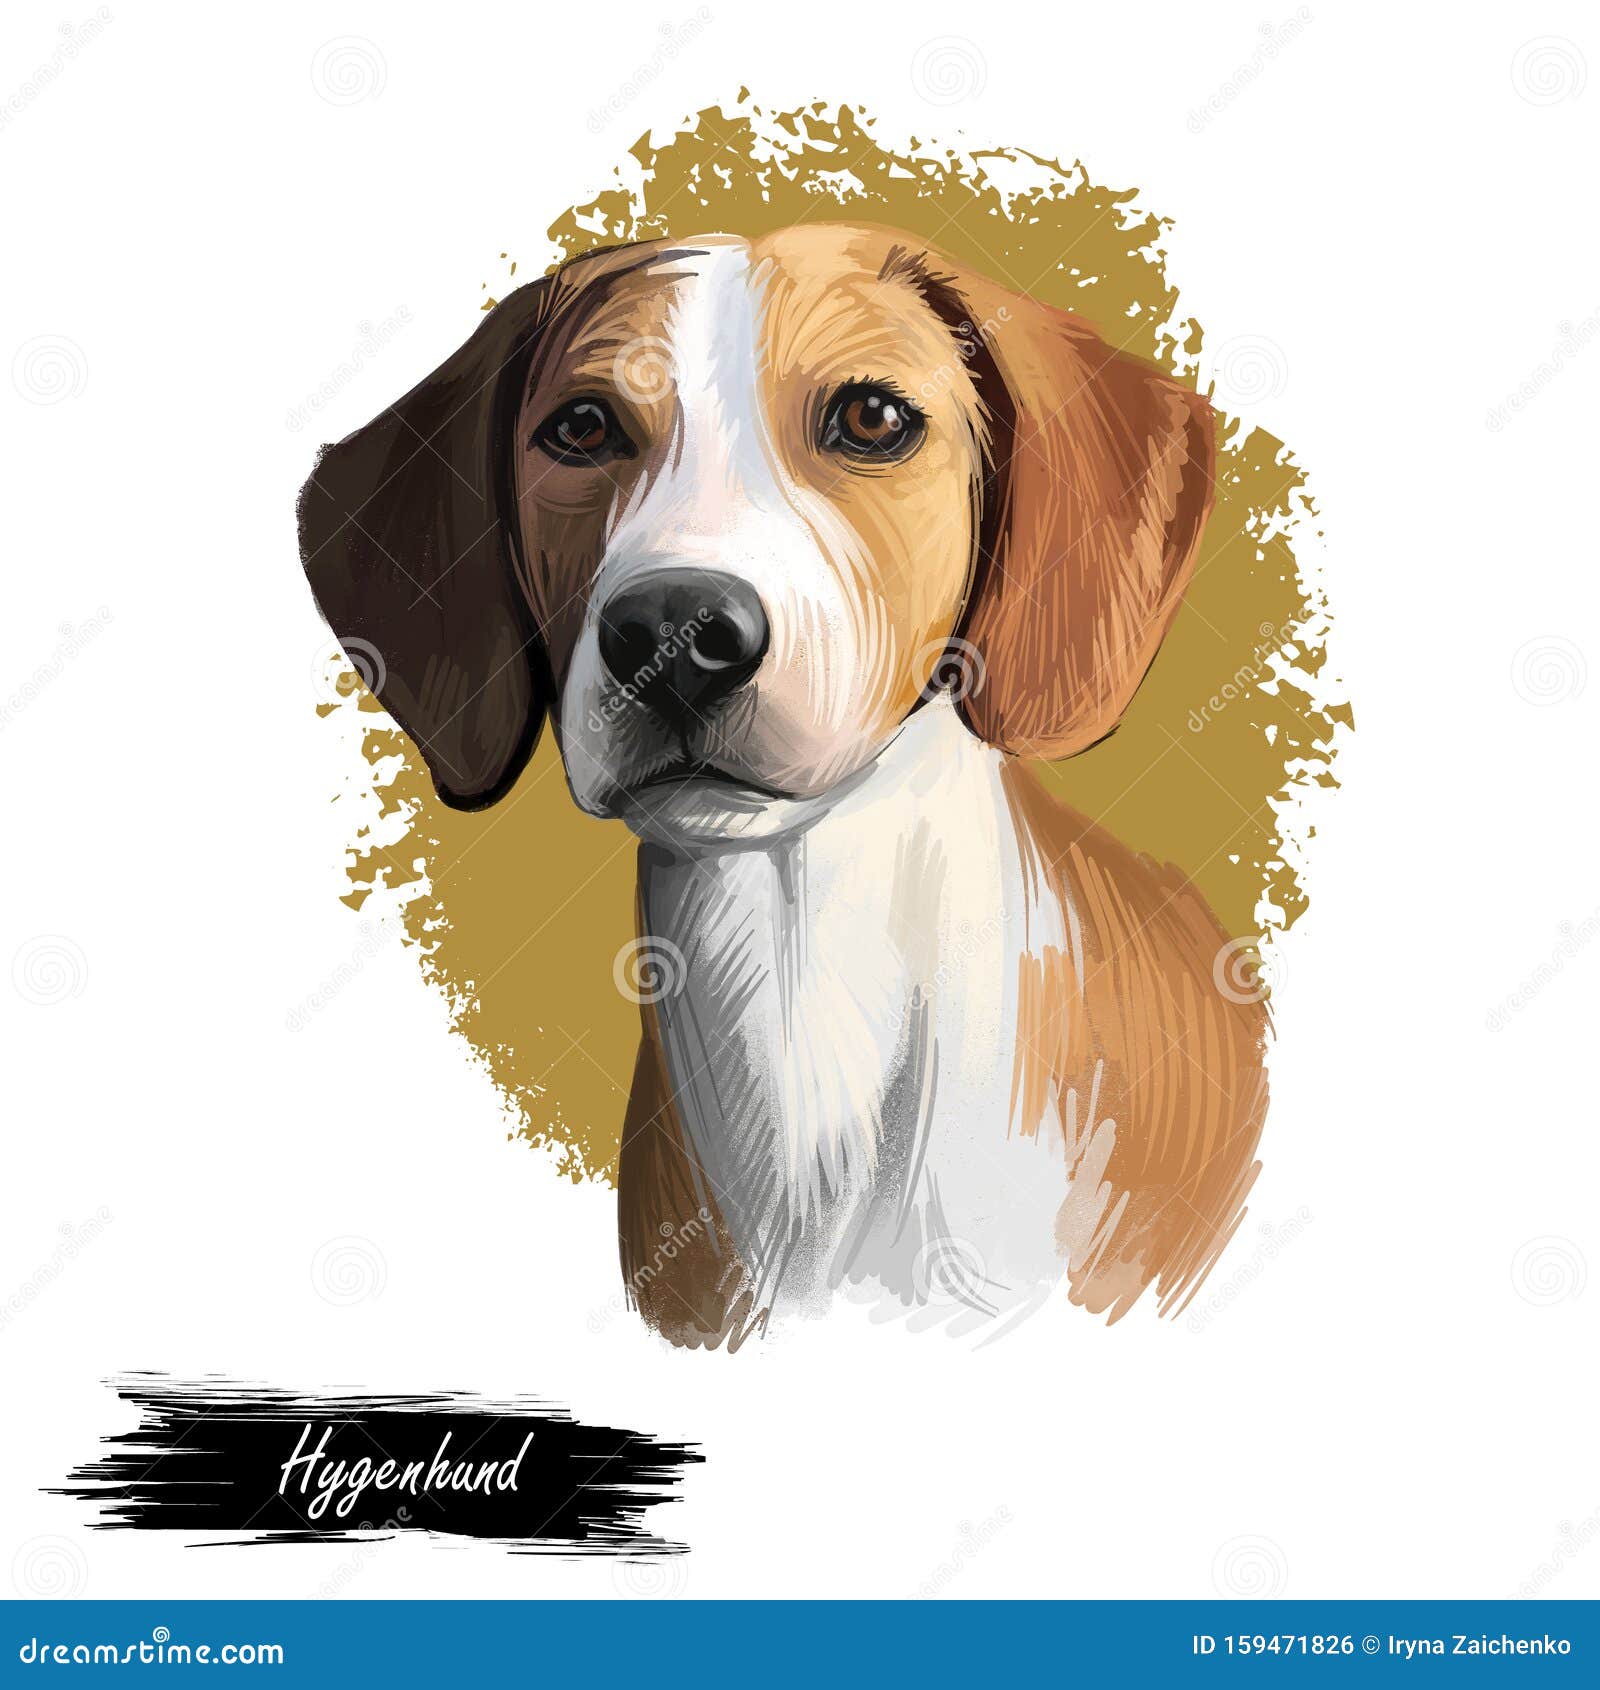 Hygenhund Hygen Hound Dog Digital Art Illustration Isolated On White Background Norwegian Origin Medium Sized Scenthound Dog Stock Illustration Illustration Of Domestic Artwork 159471826